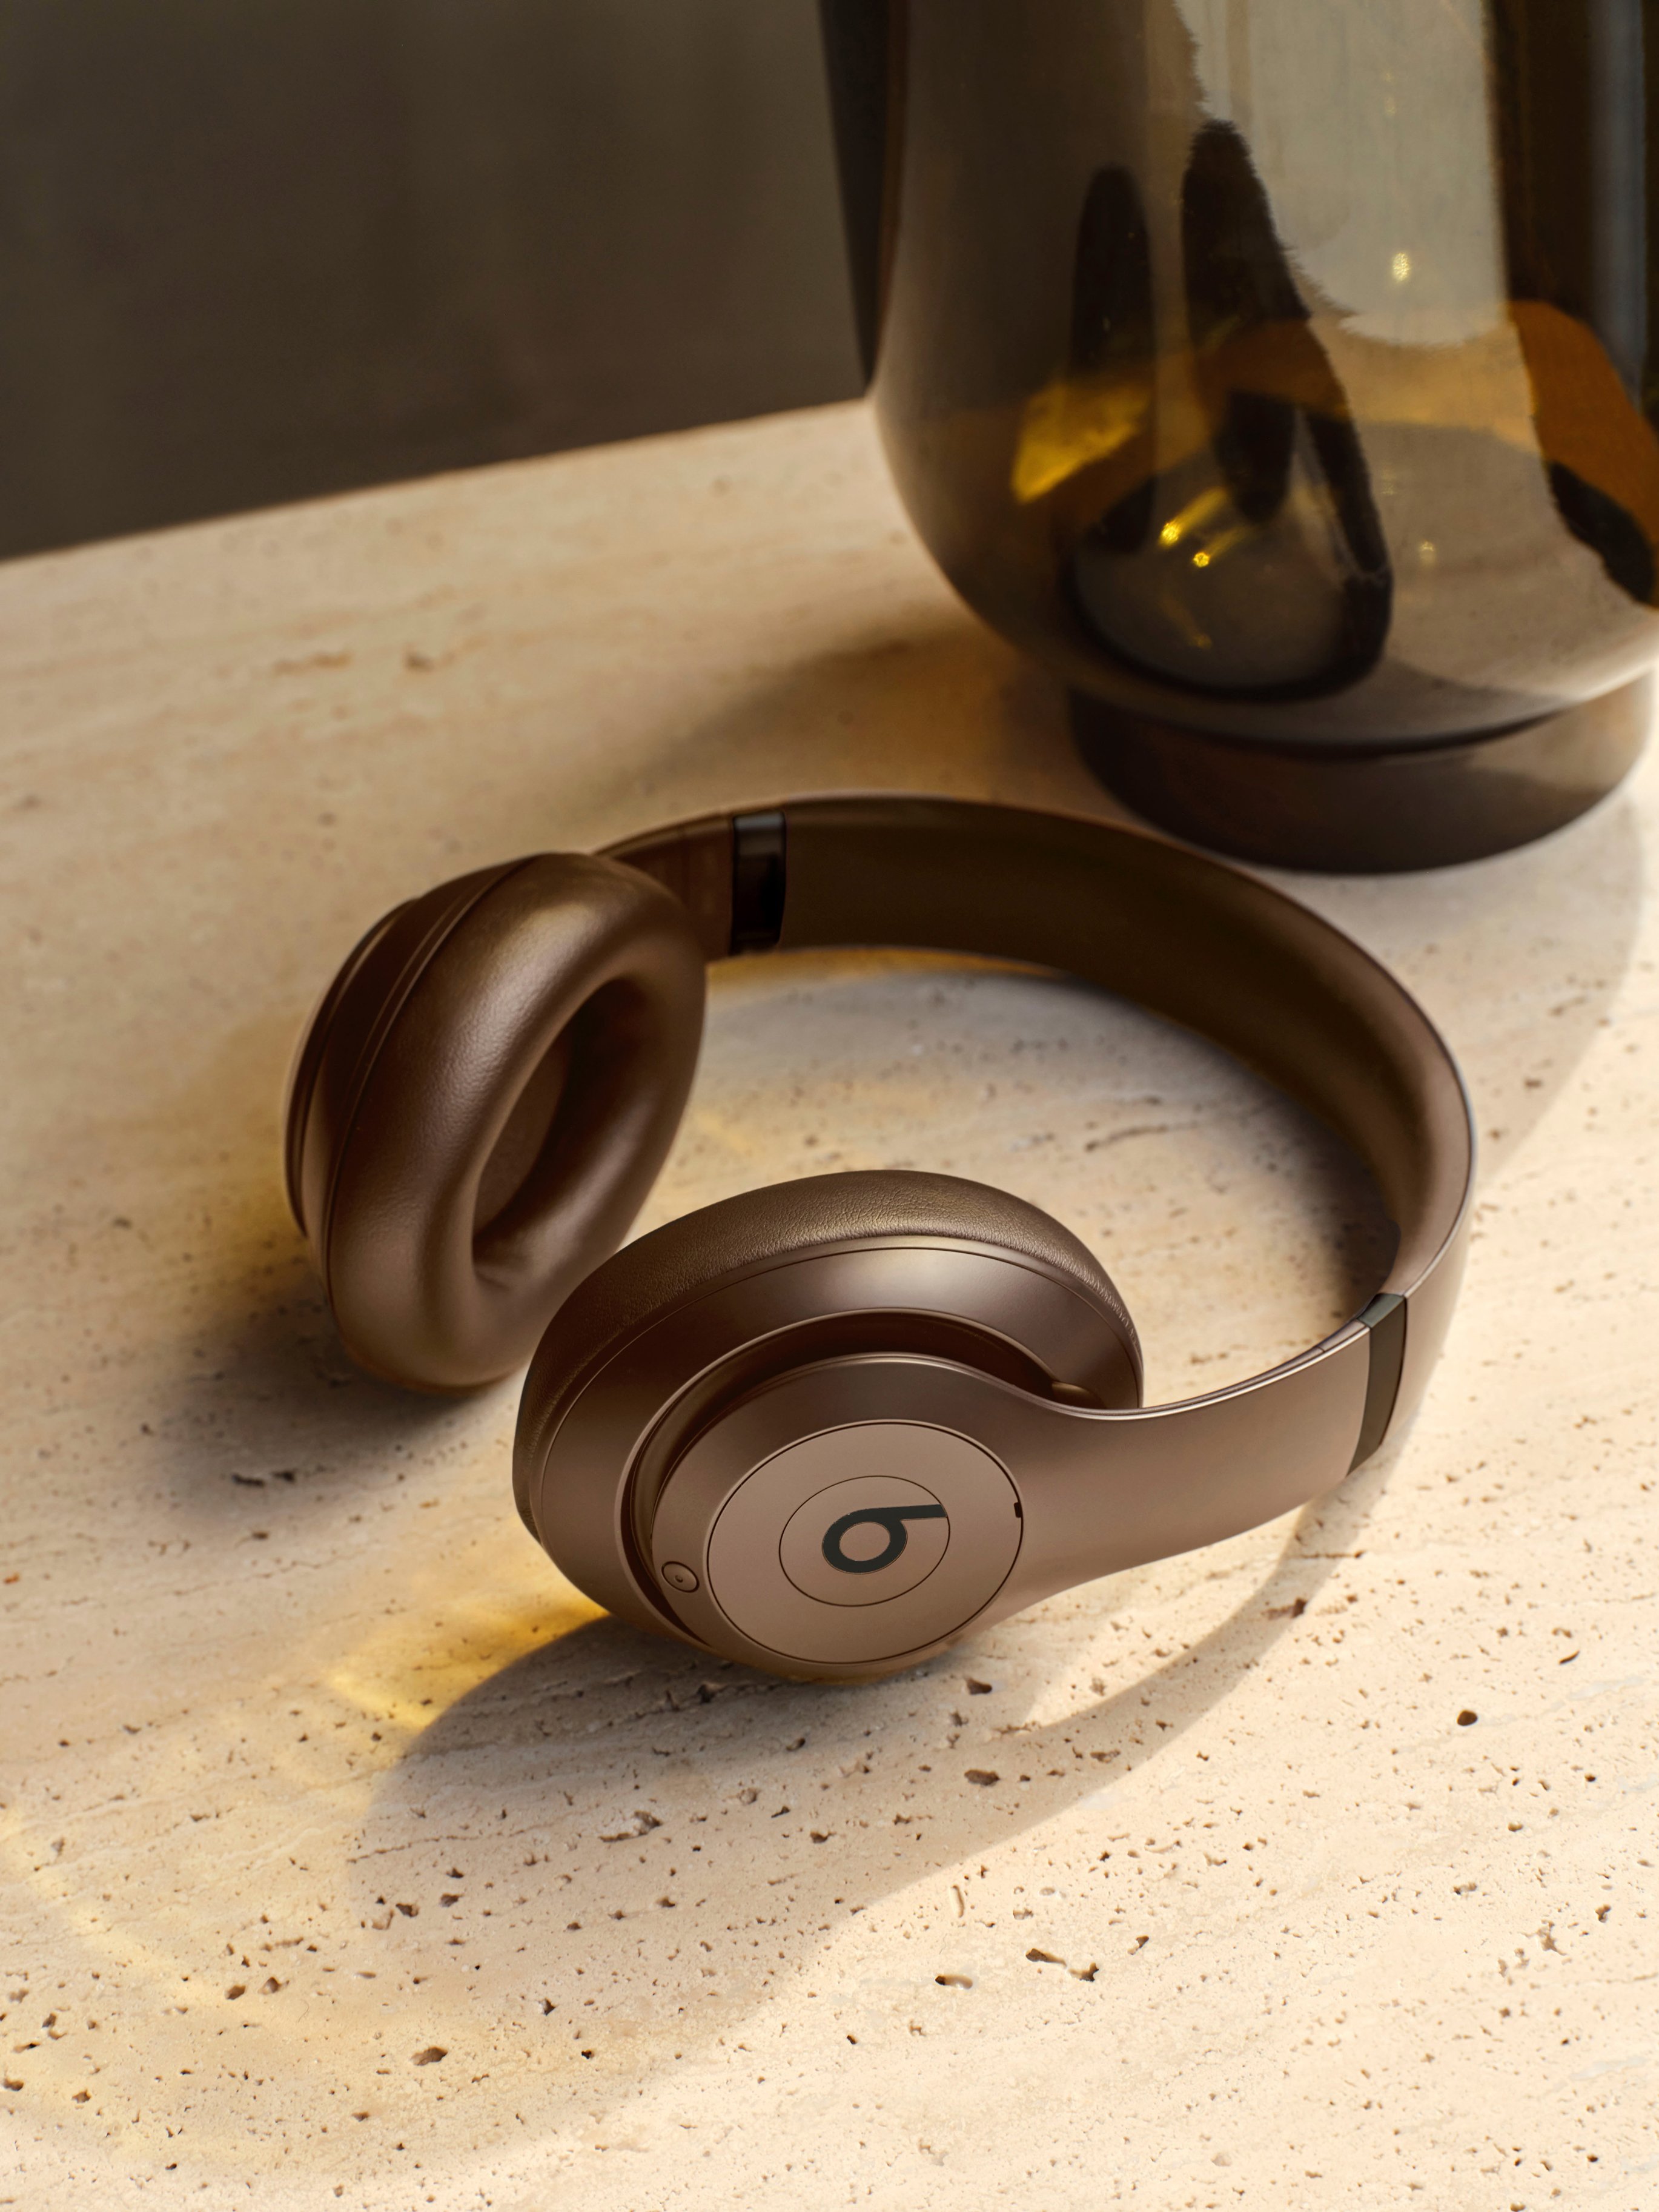 Beats Studio Pro Wireless Noise Cancelling Over-the-Ear Headphones Deep  Brown MQTT3LL/A - Best Buy